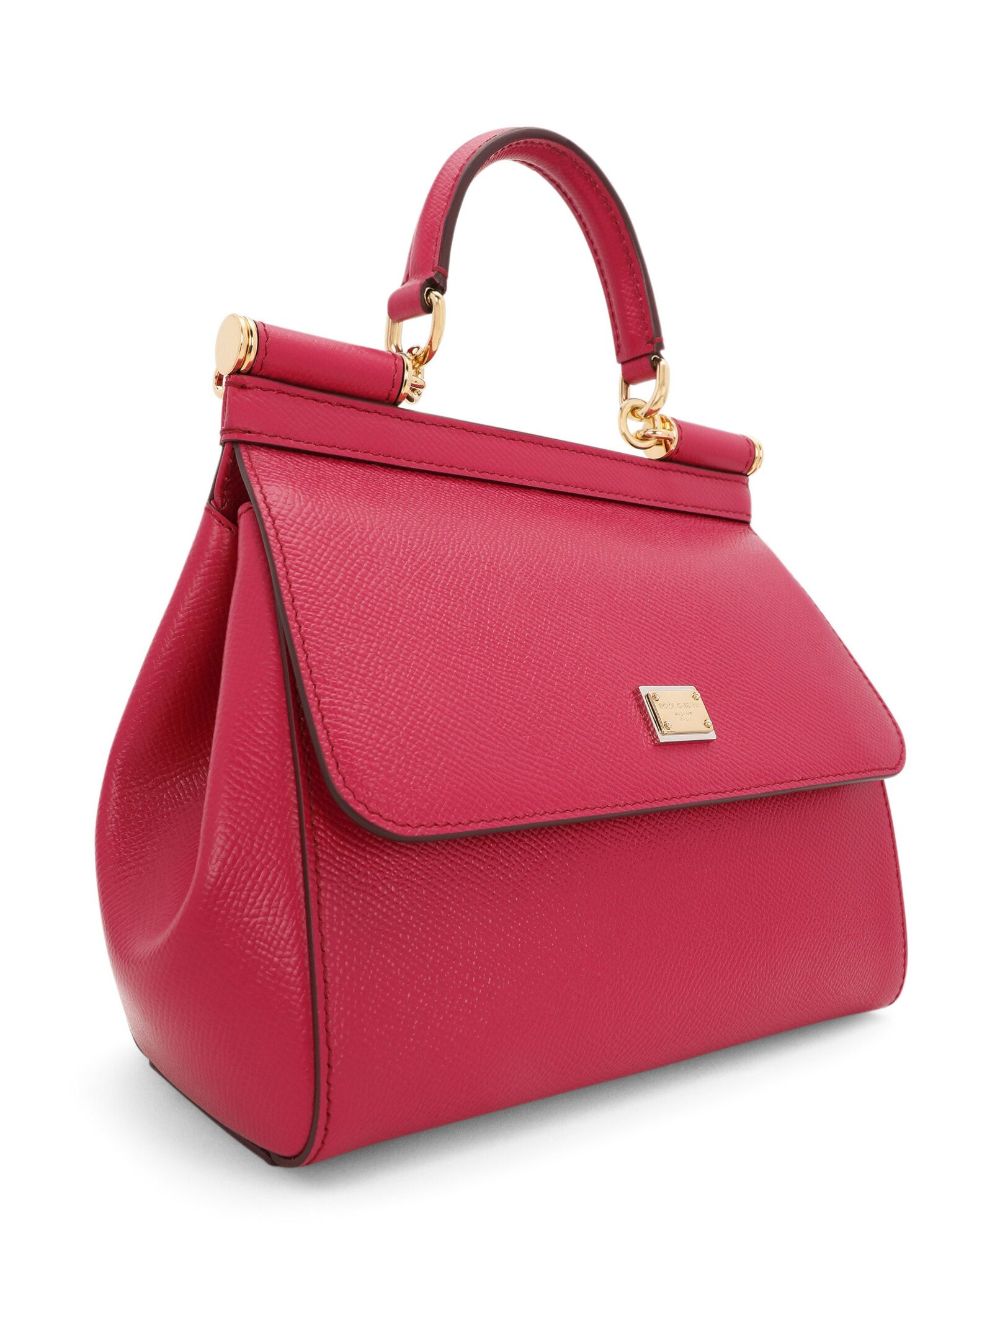 DOLCE & GABBANA Fuchsia Pink Leather Crossbody Handbag with Gold-Tone Logo, Magnetic Closure, and Detachable Strap - Medium